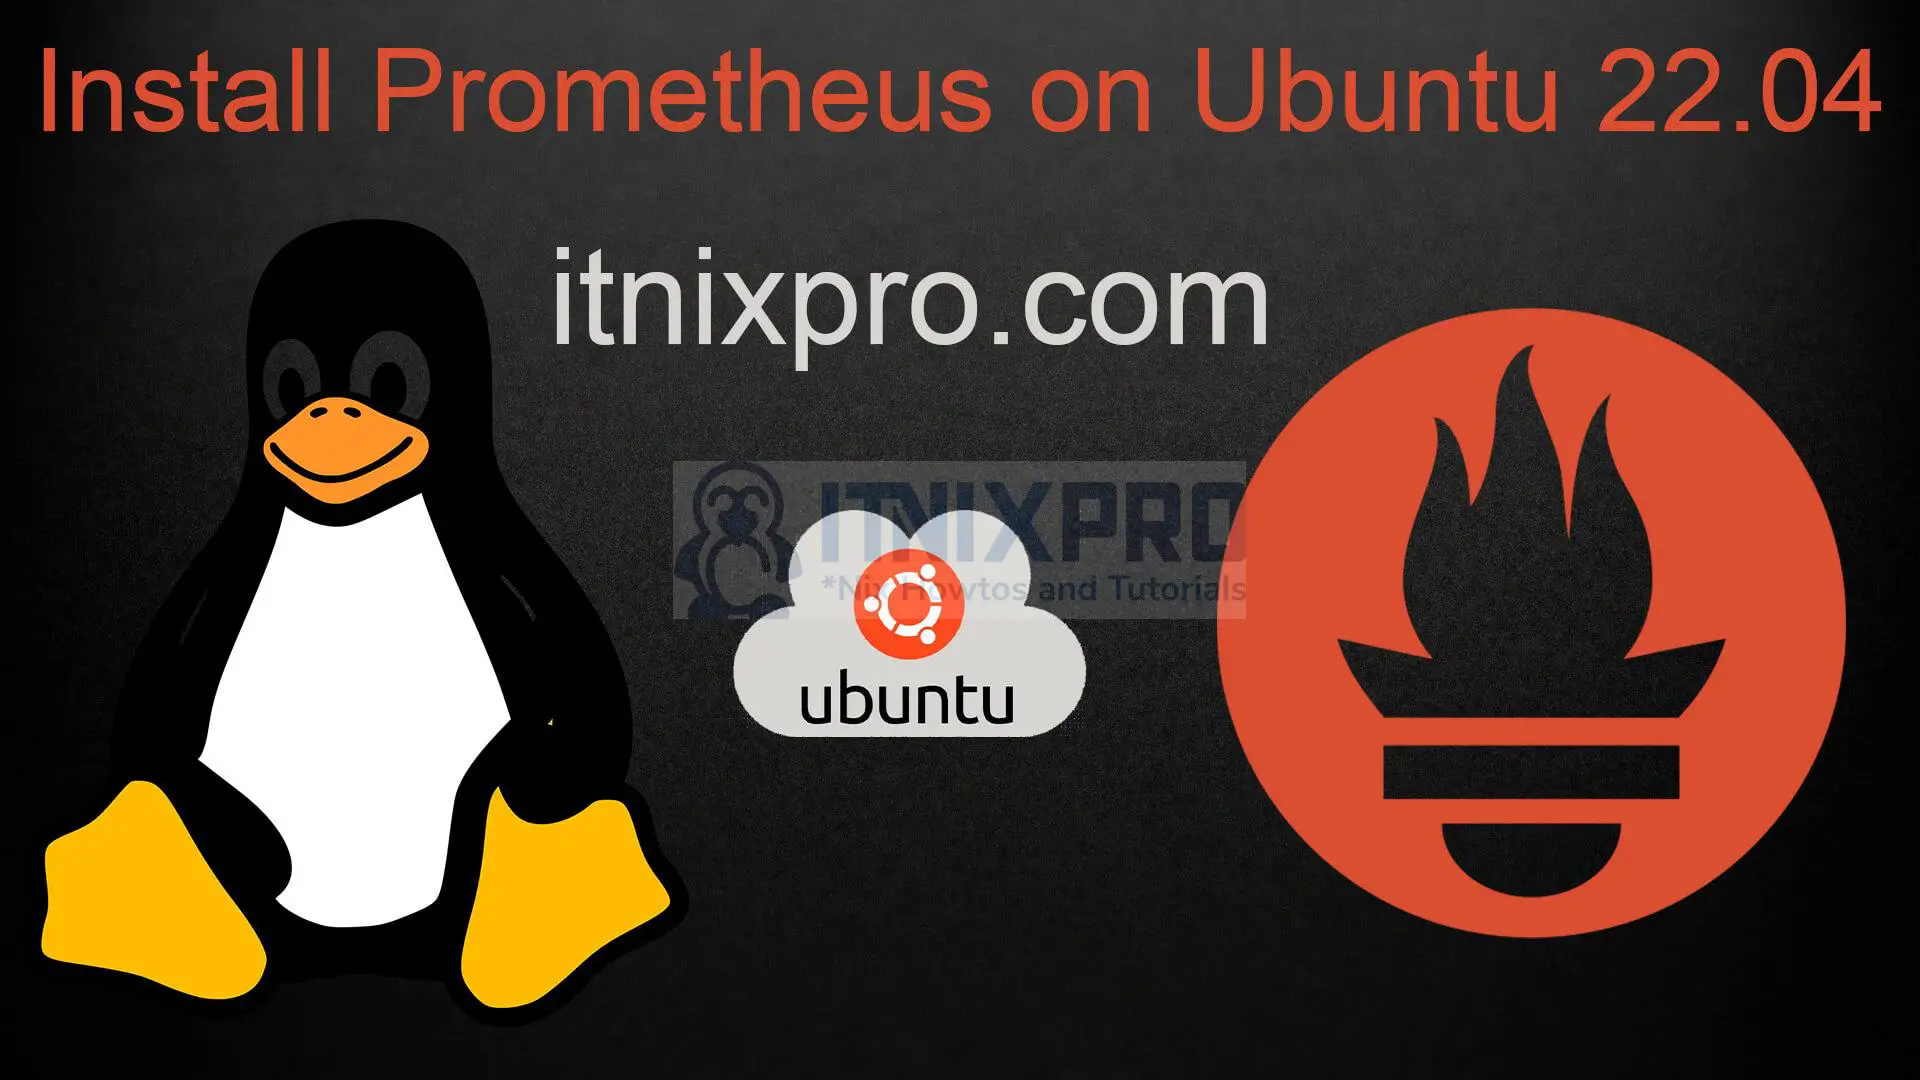 Install Prometheus on Ubuntu 22.04